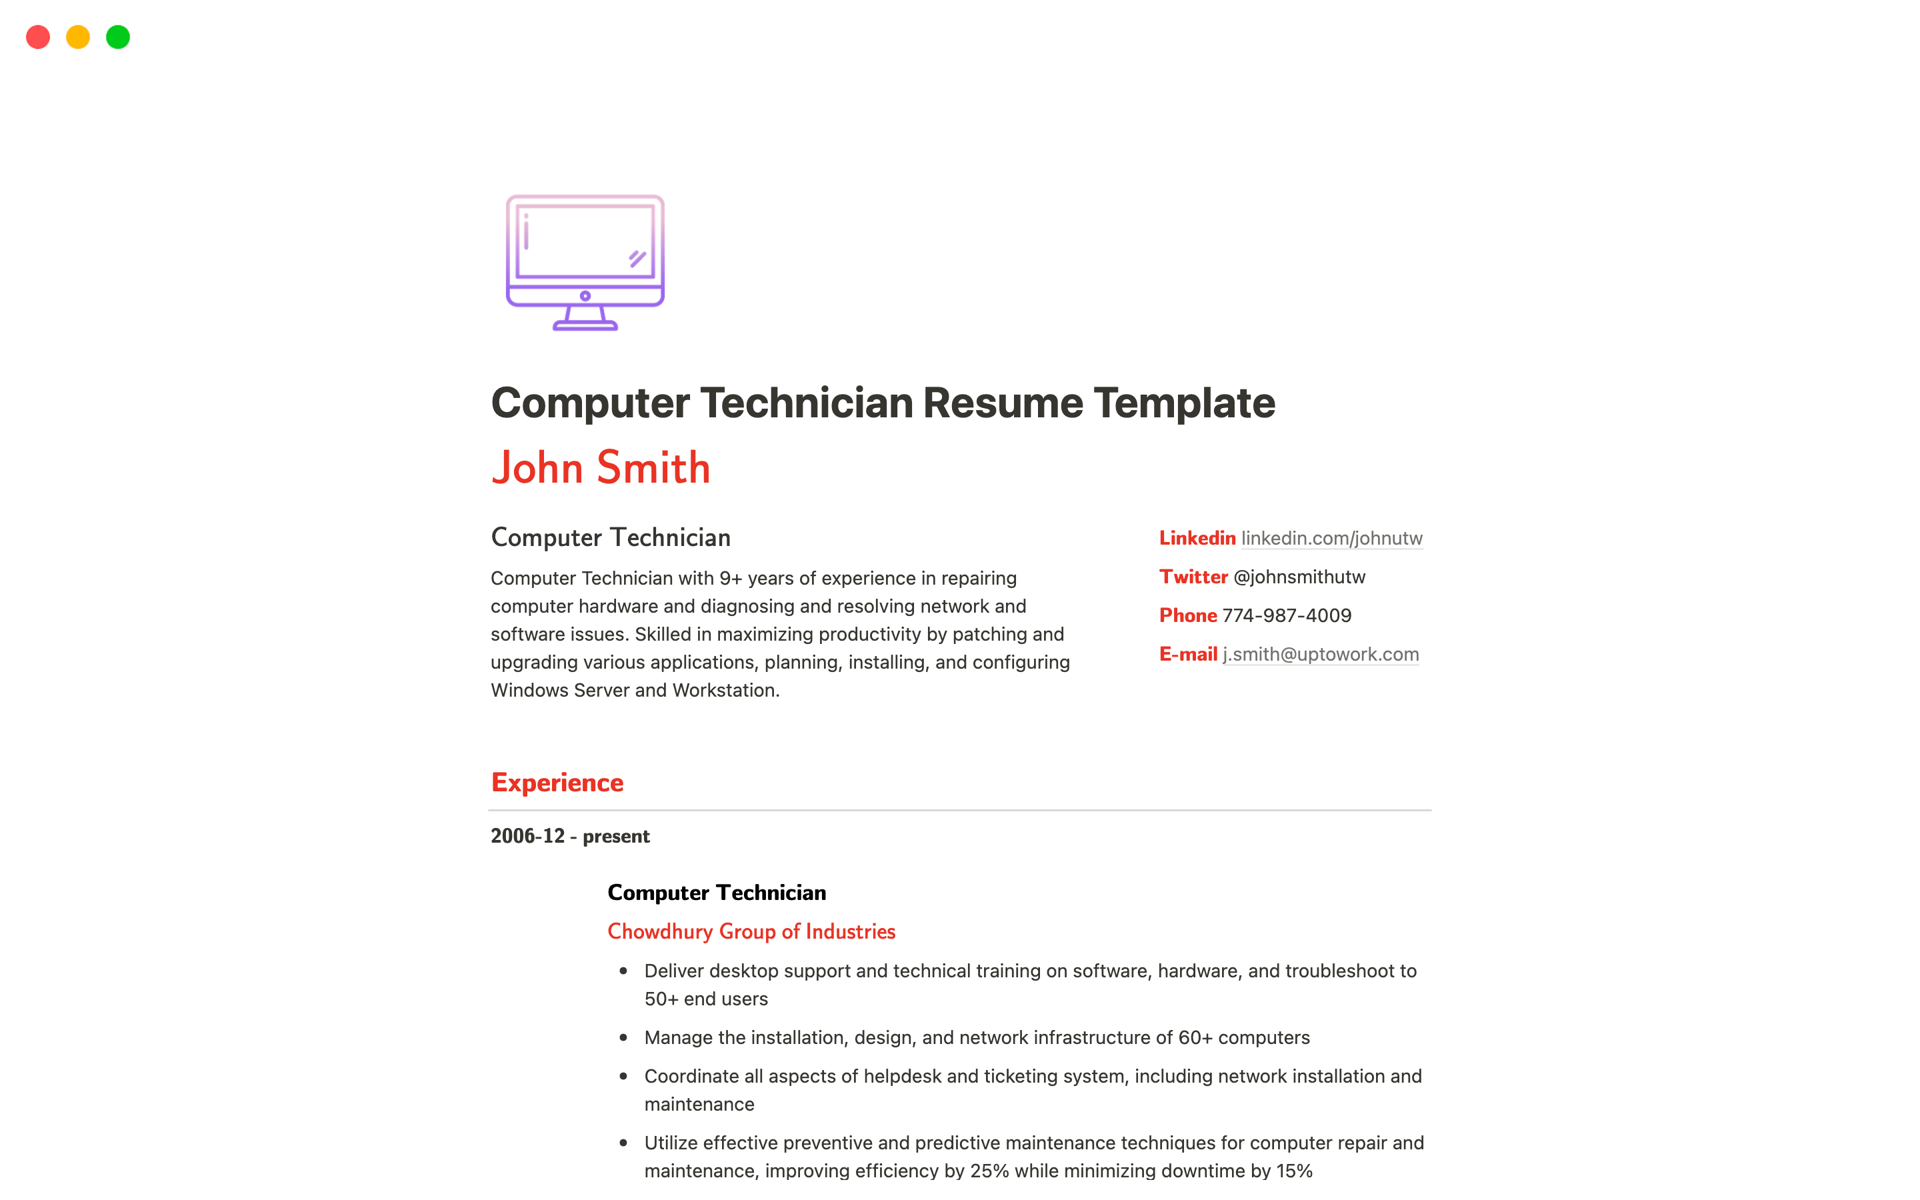 Vista previa de plantilla para Computer Technician Resume